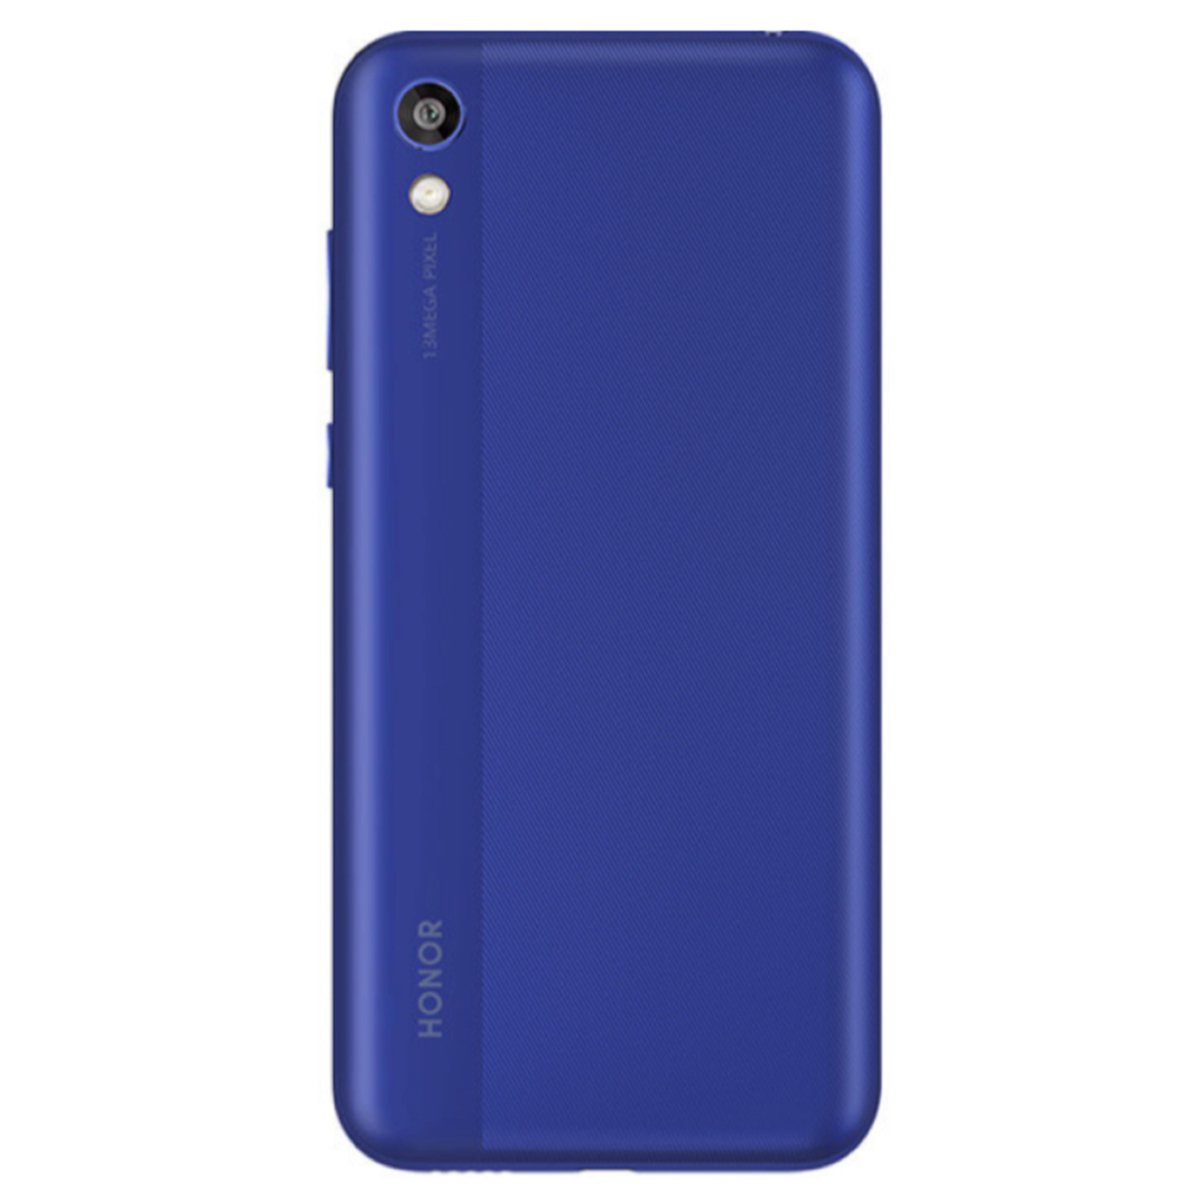 Honor 8S 32GB Blue